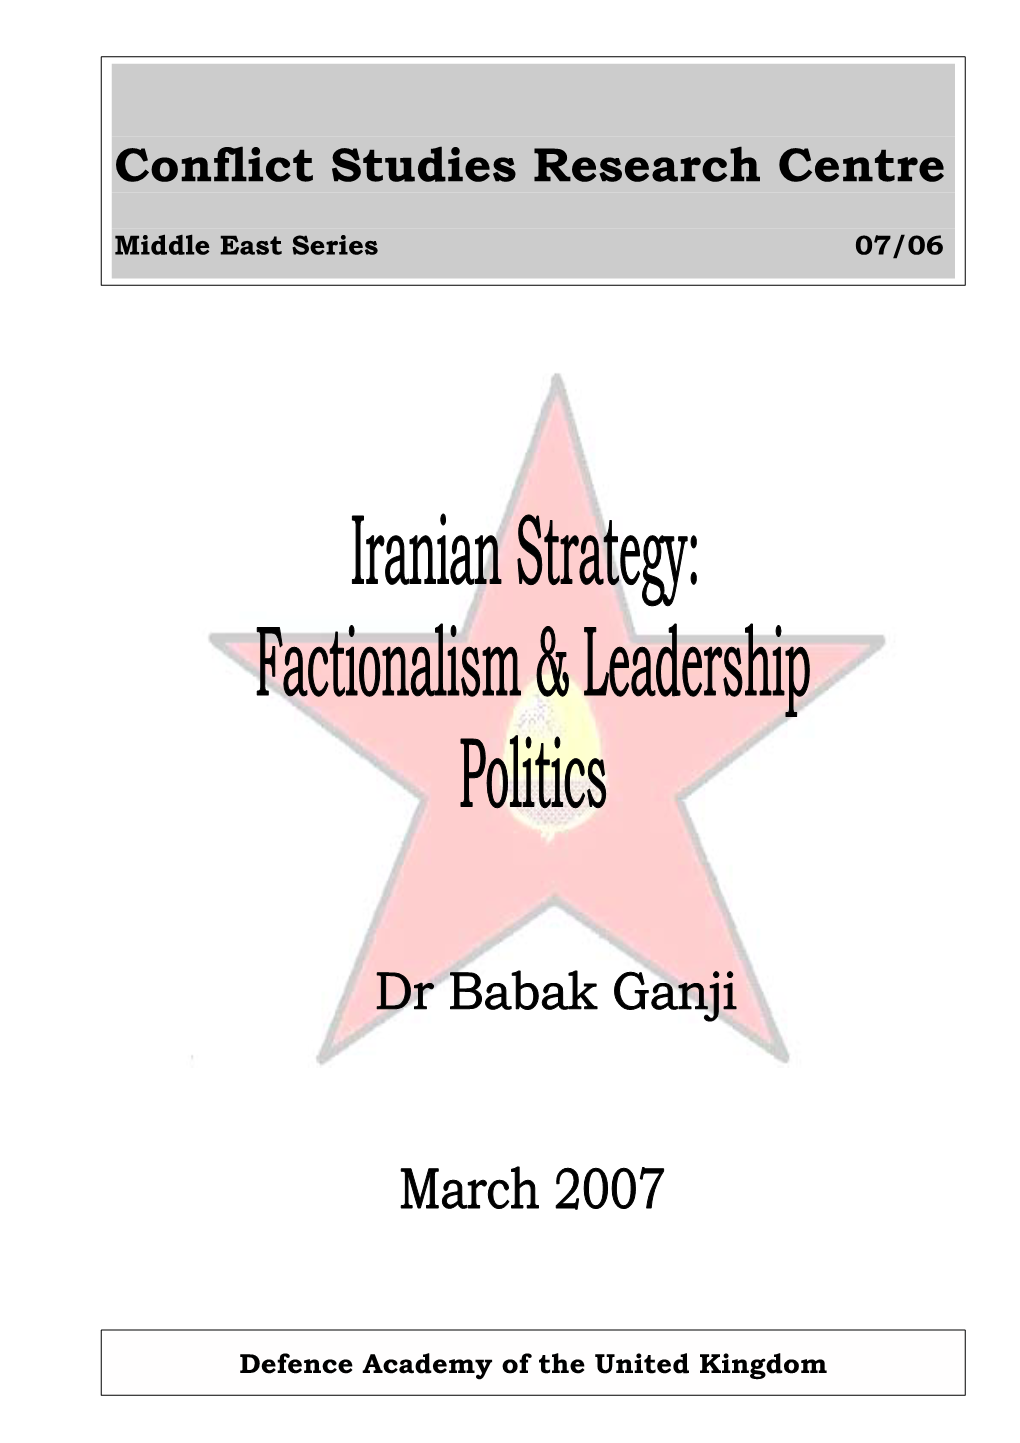 Iranian Strategy: Factionalism & Leadership Politics